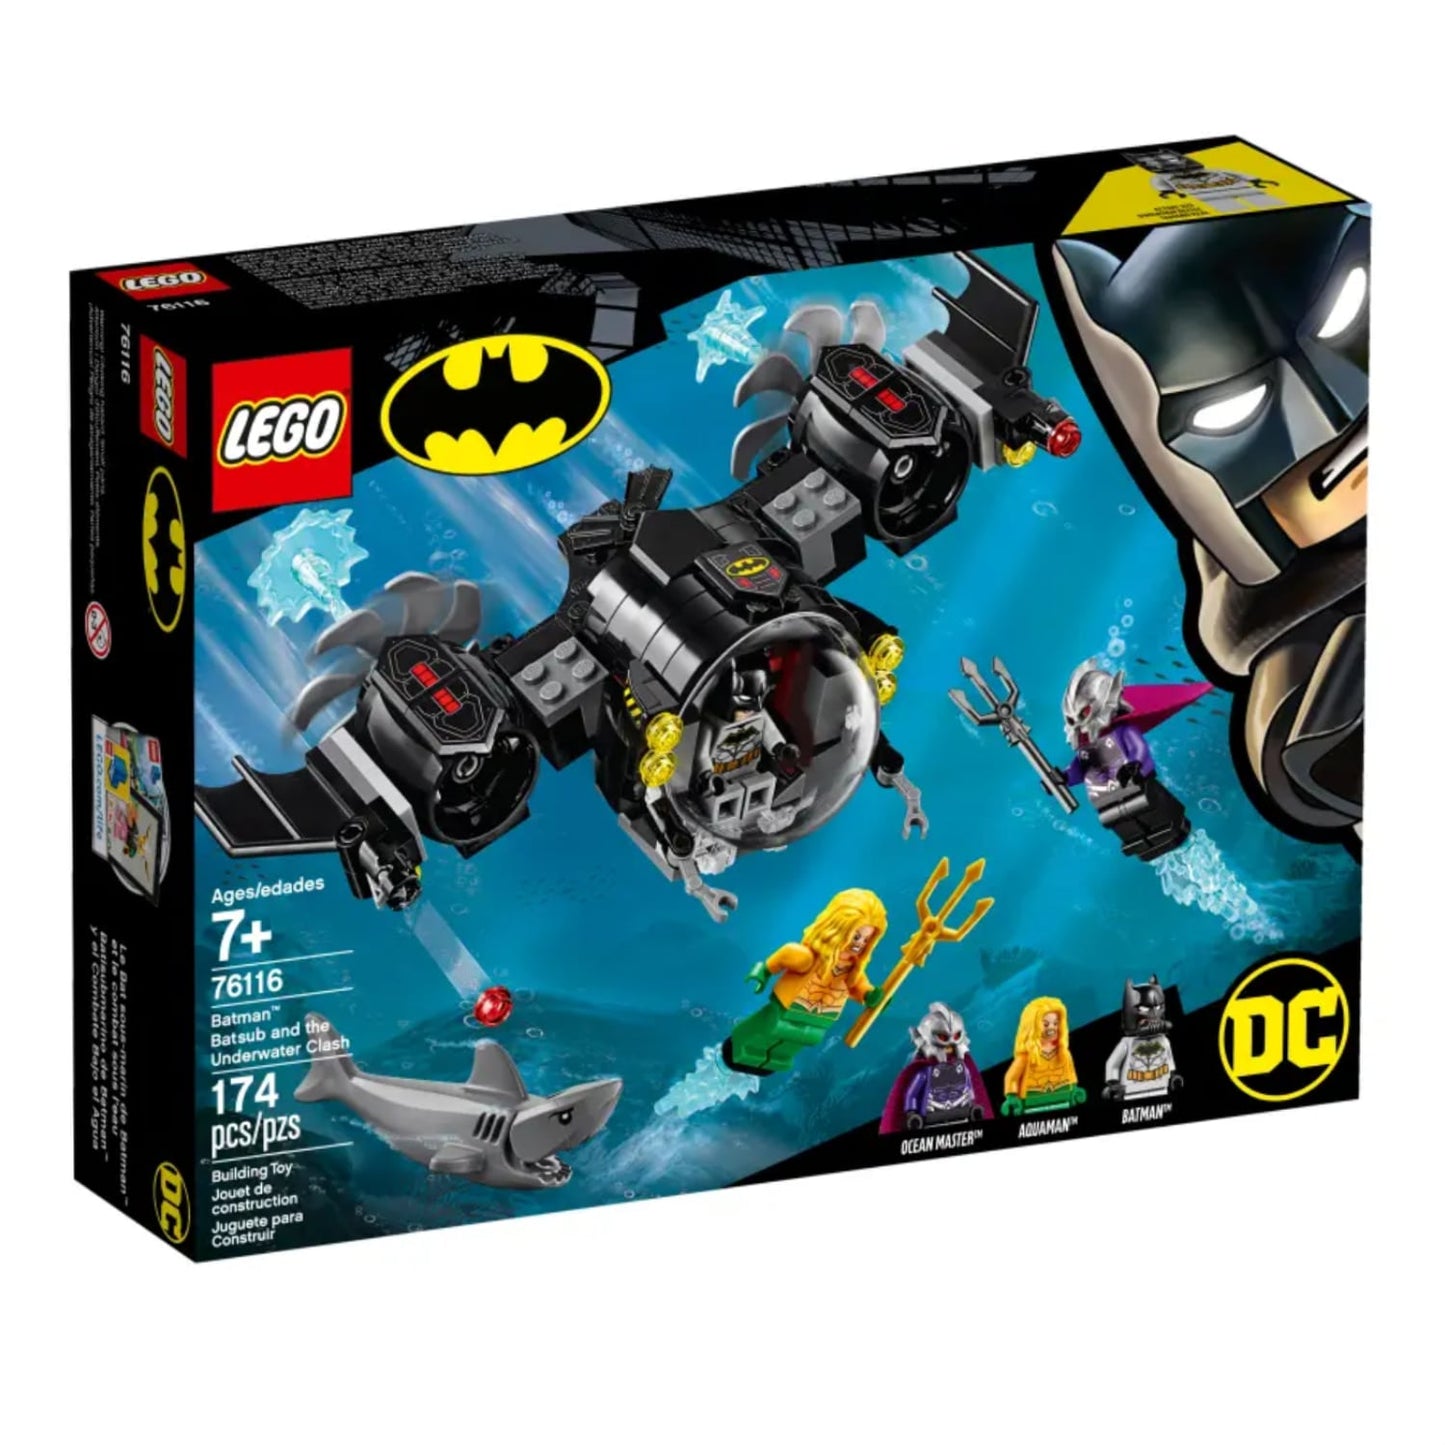 Lego 76116 DC Batman Batsub and the Underwater Clash